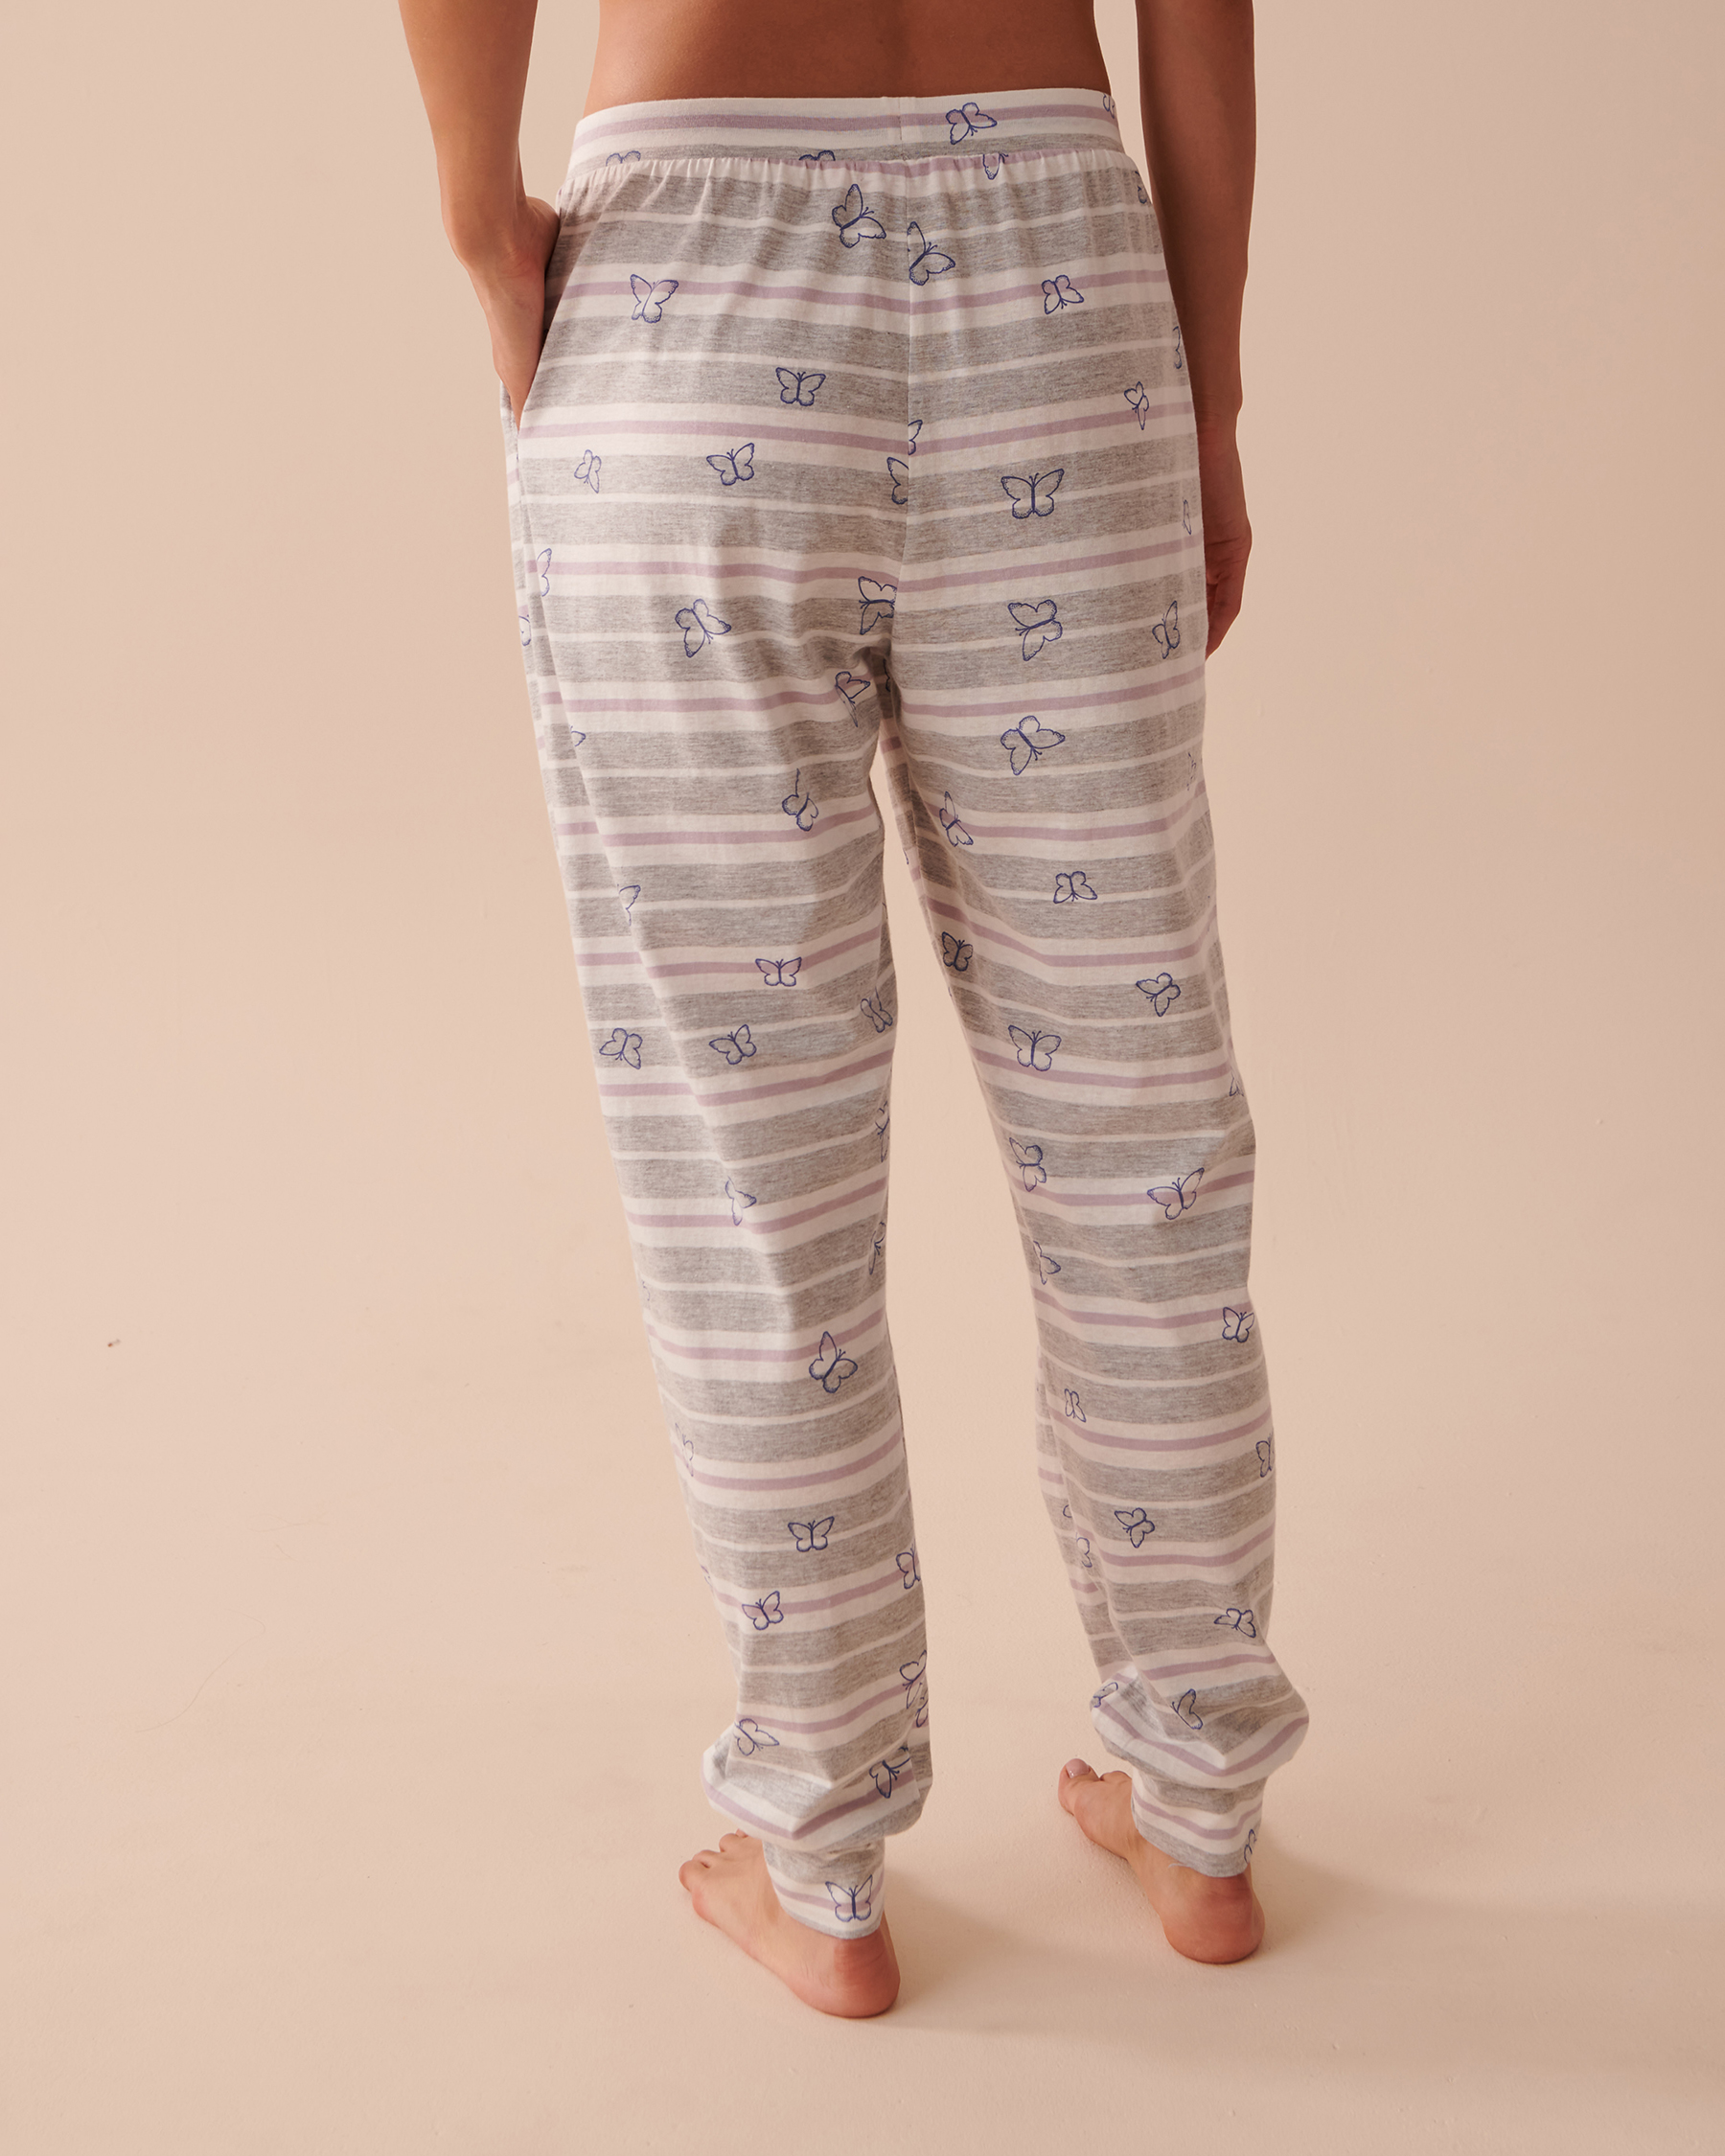 LA VIE EN ROSE Cotton Fitted Pajama Pants Stripes and Butterflies 40200534 - View2